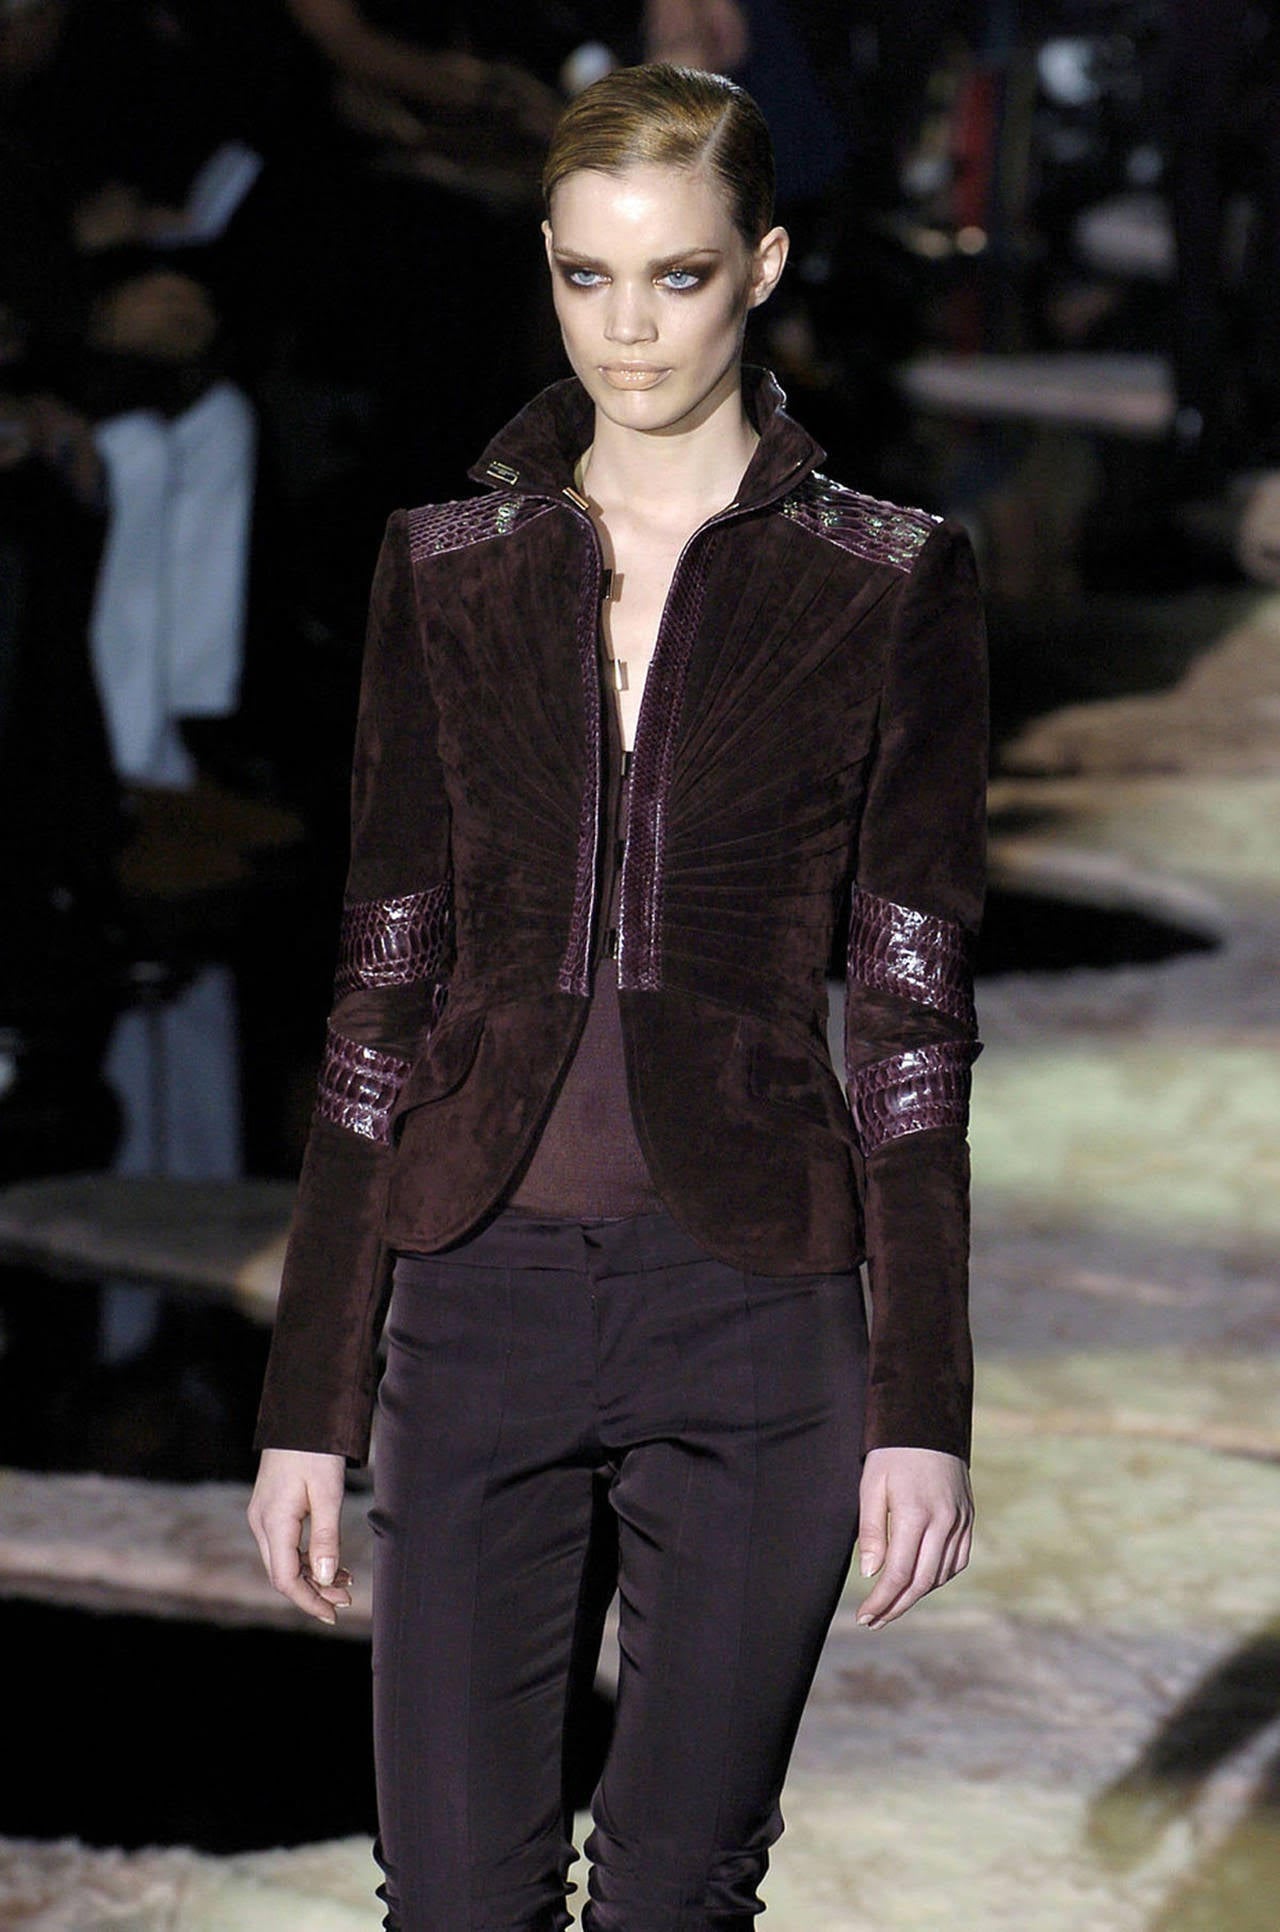 2004 F/W Suede Python Darted Jacket by Gucci on model @recessla